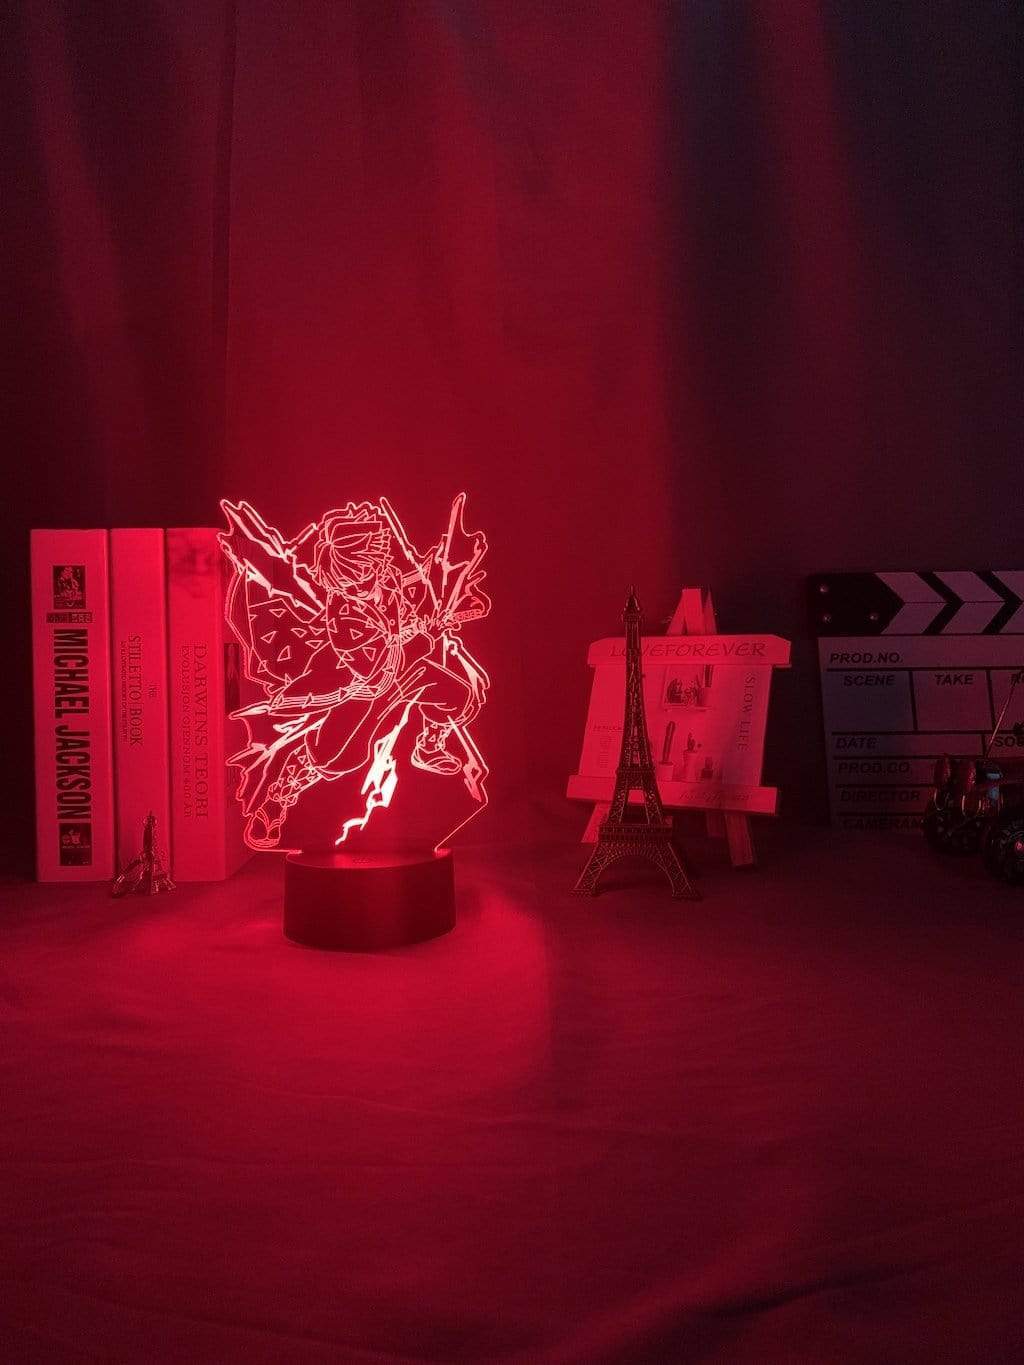 Lampe Kimetsu No Yaiba Led Night Light Anime Demon Slayer Lamp for Bedroom Decor Agatsuma Zenitsu Light lampe led 3D